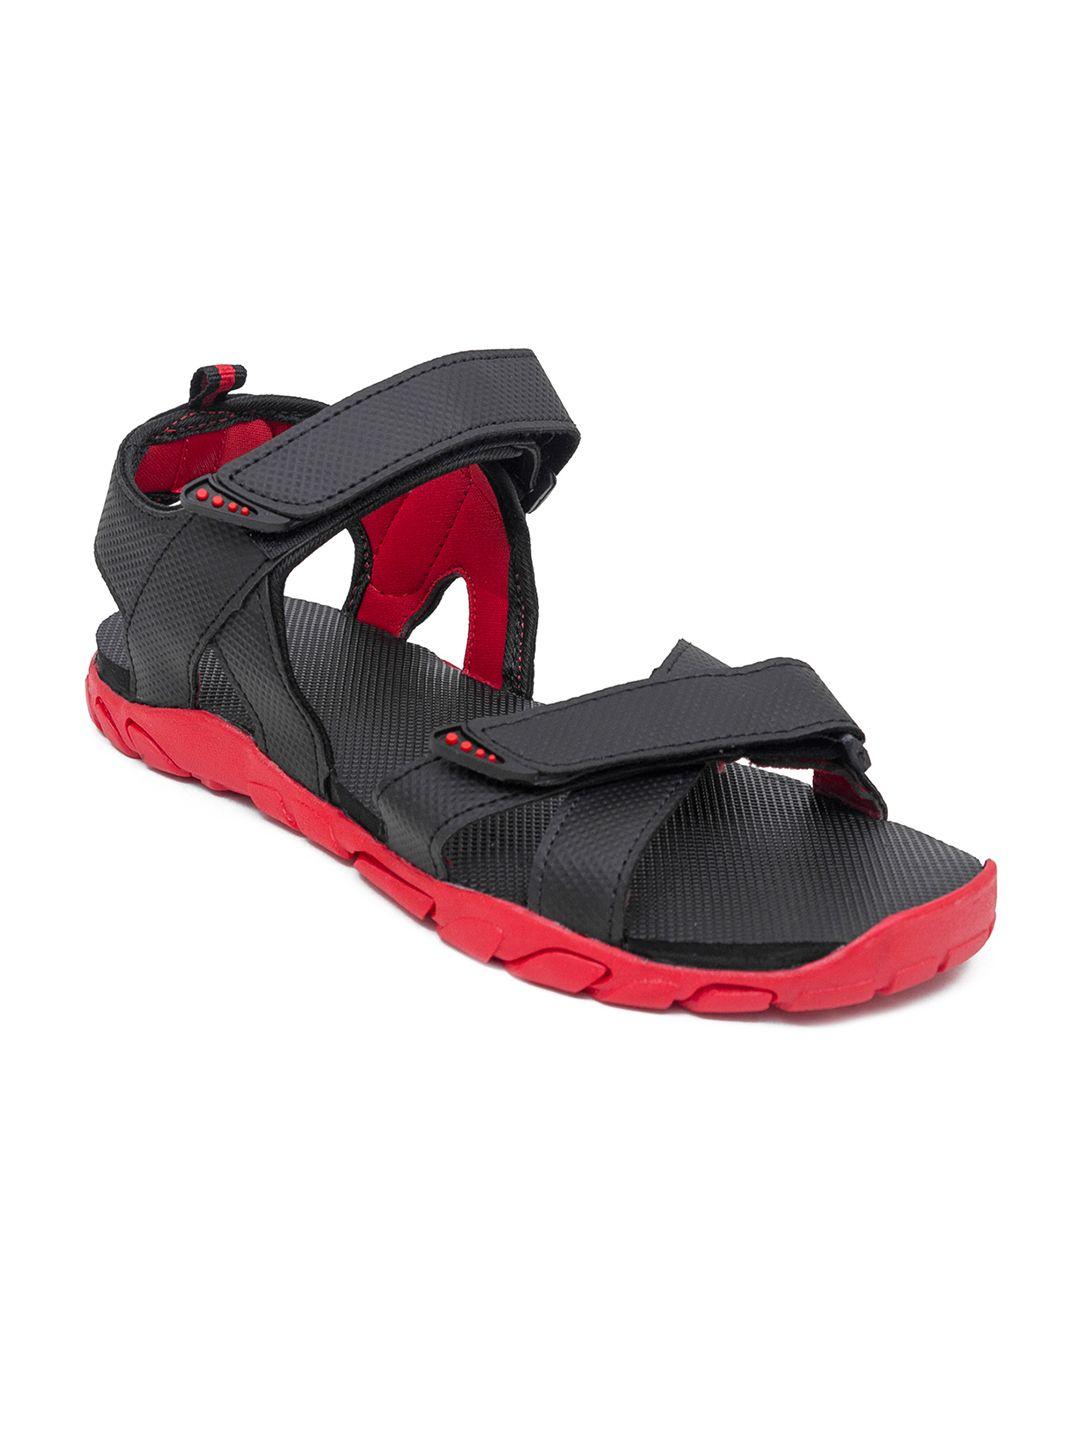 asian-men-black-sports-sandals